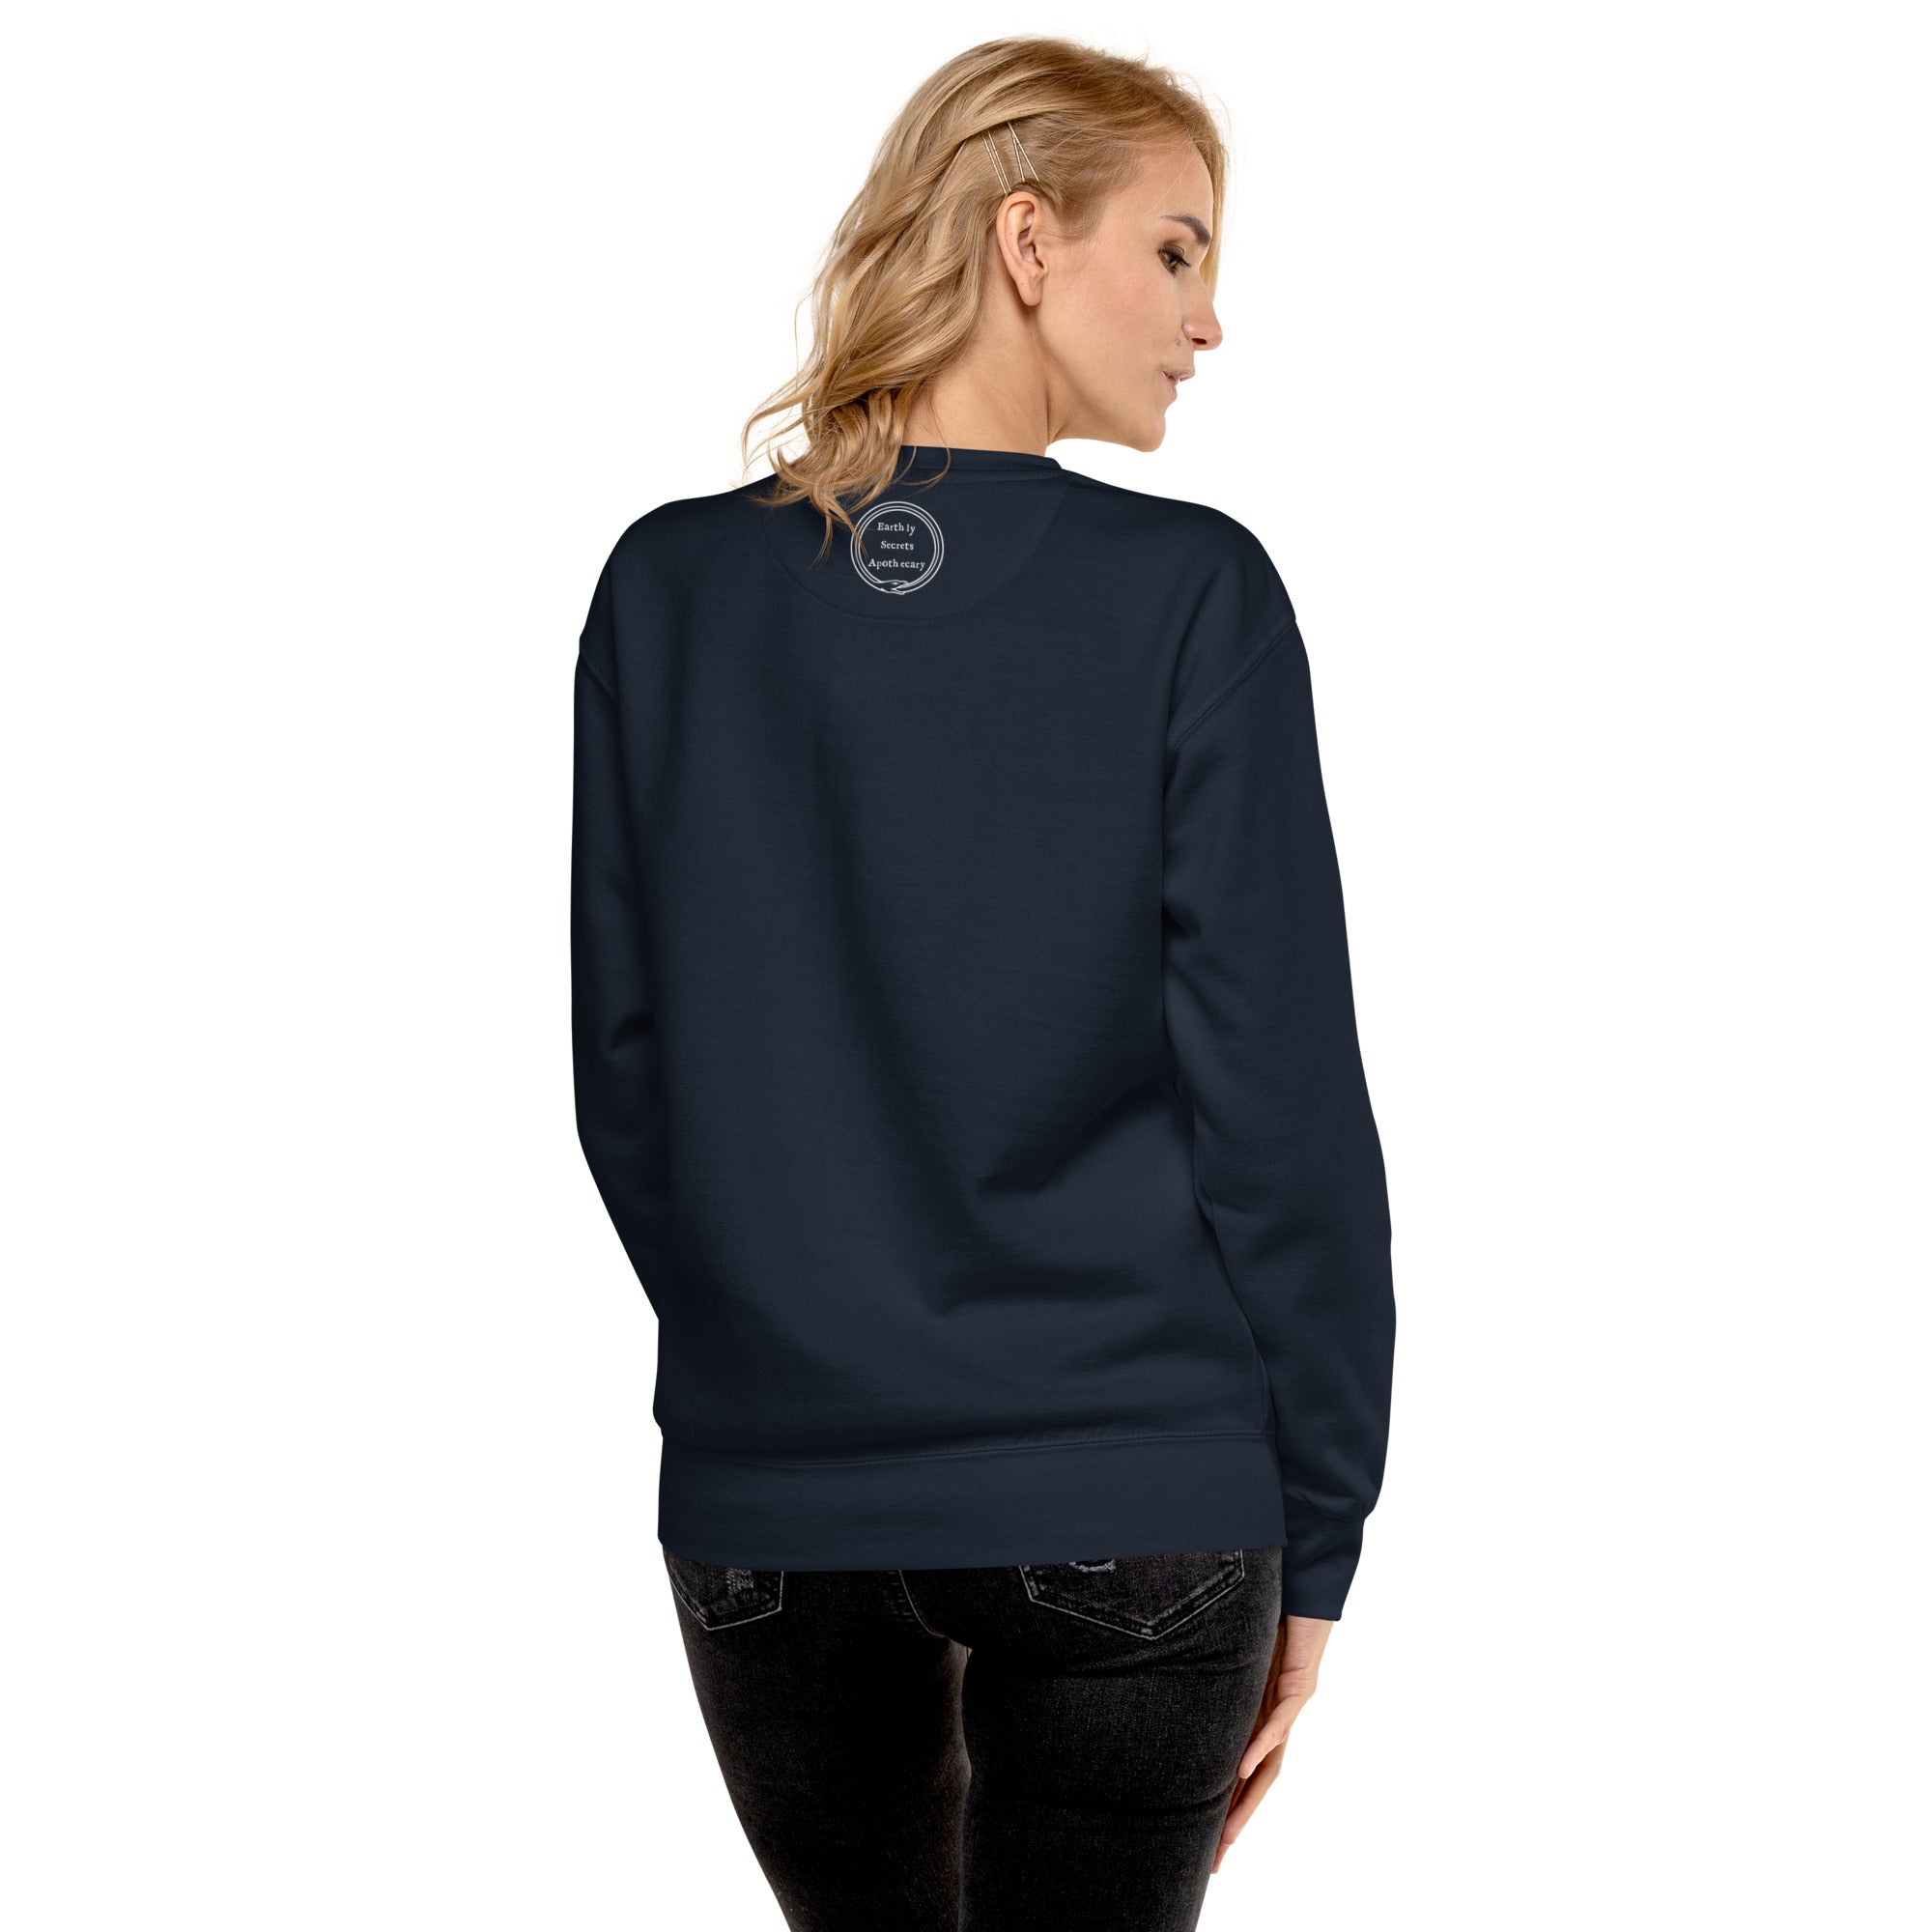 E.S. Apothecary - Unisex Premium Sweatshirt - Earthly Secrets